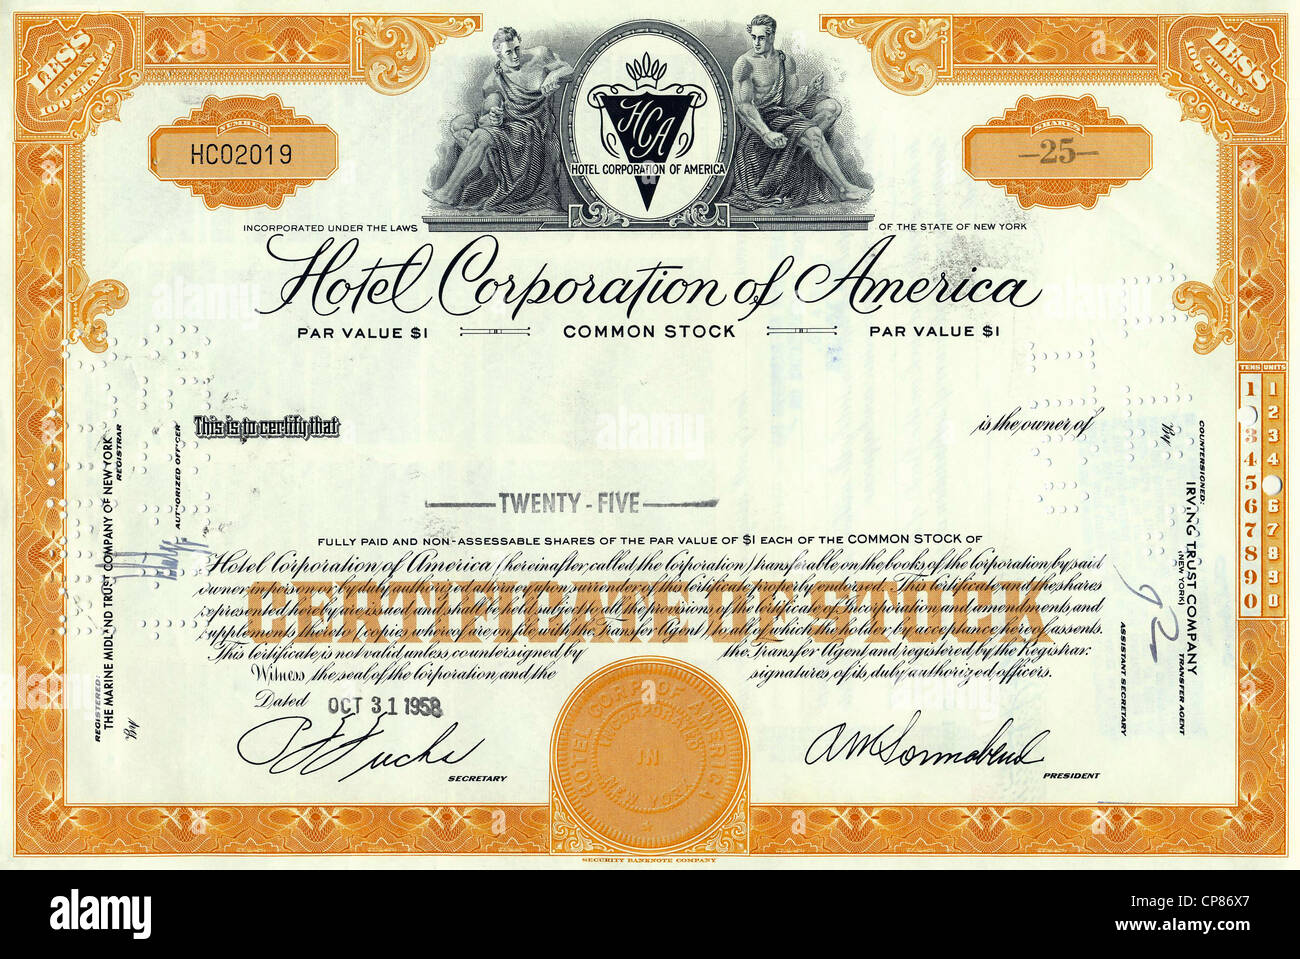 Hotel Corporation of America Stock Certificate 